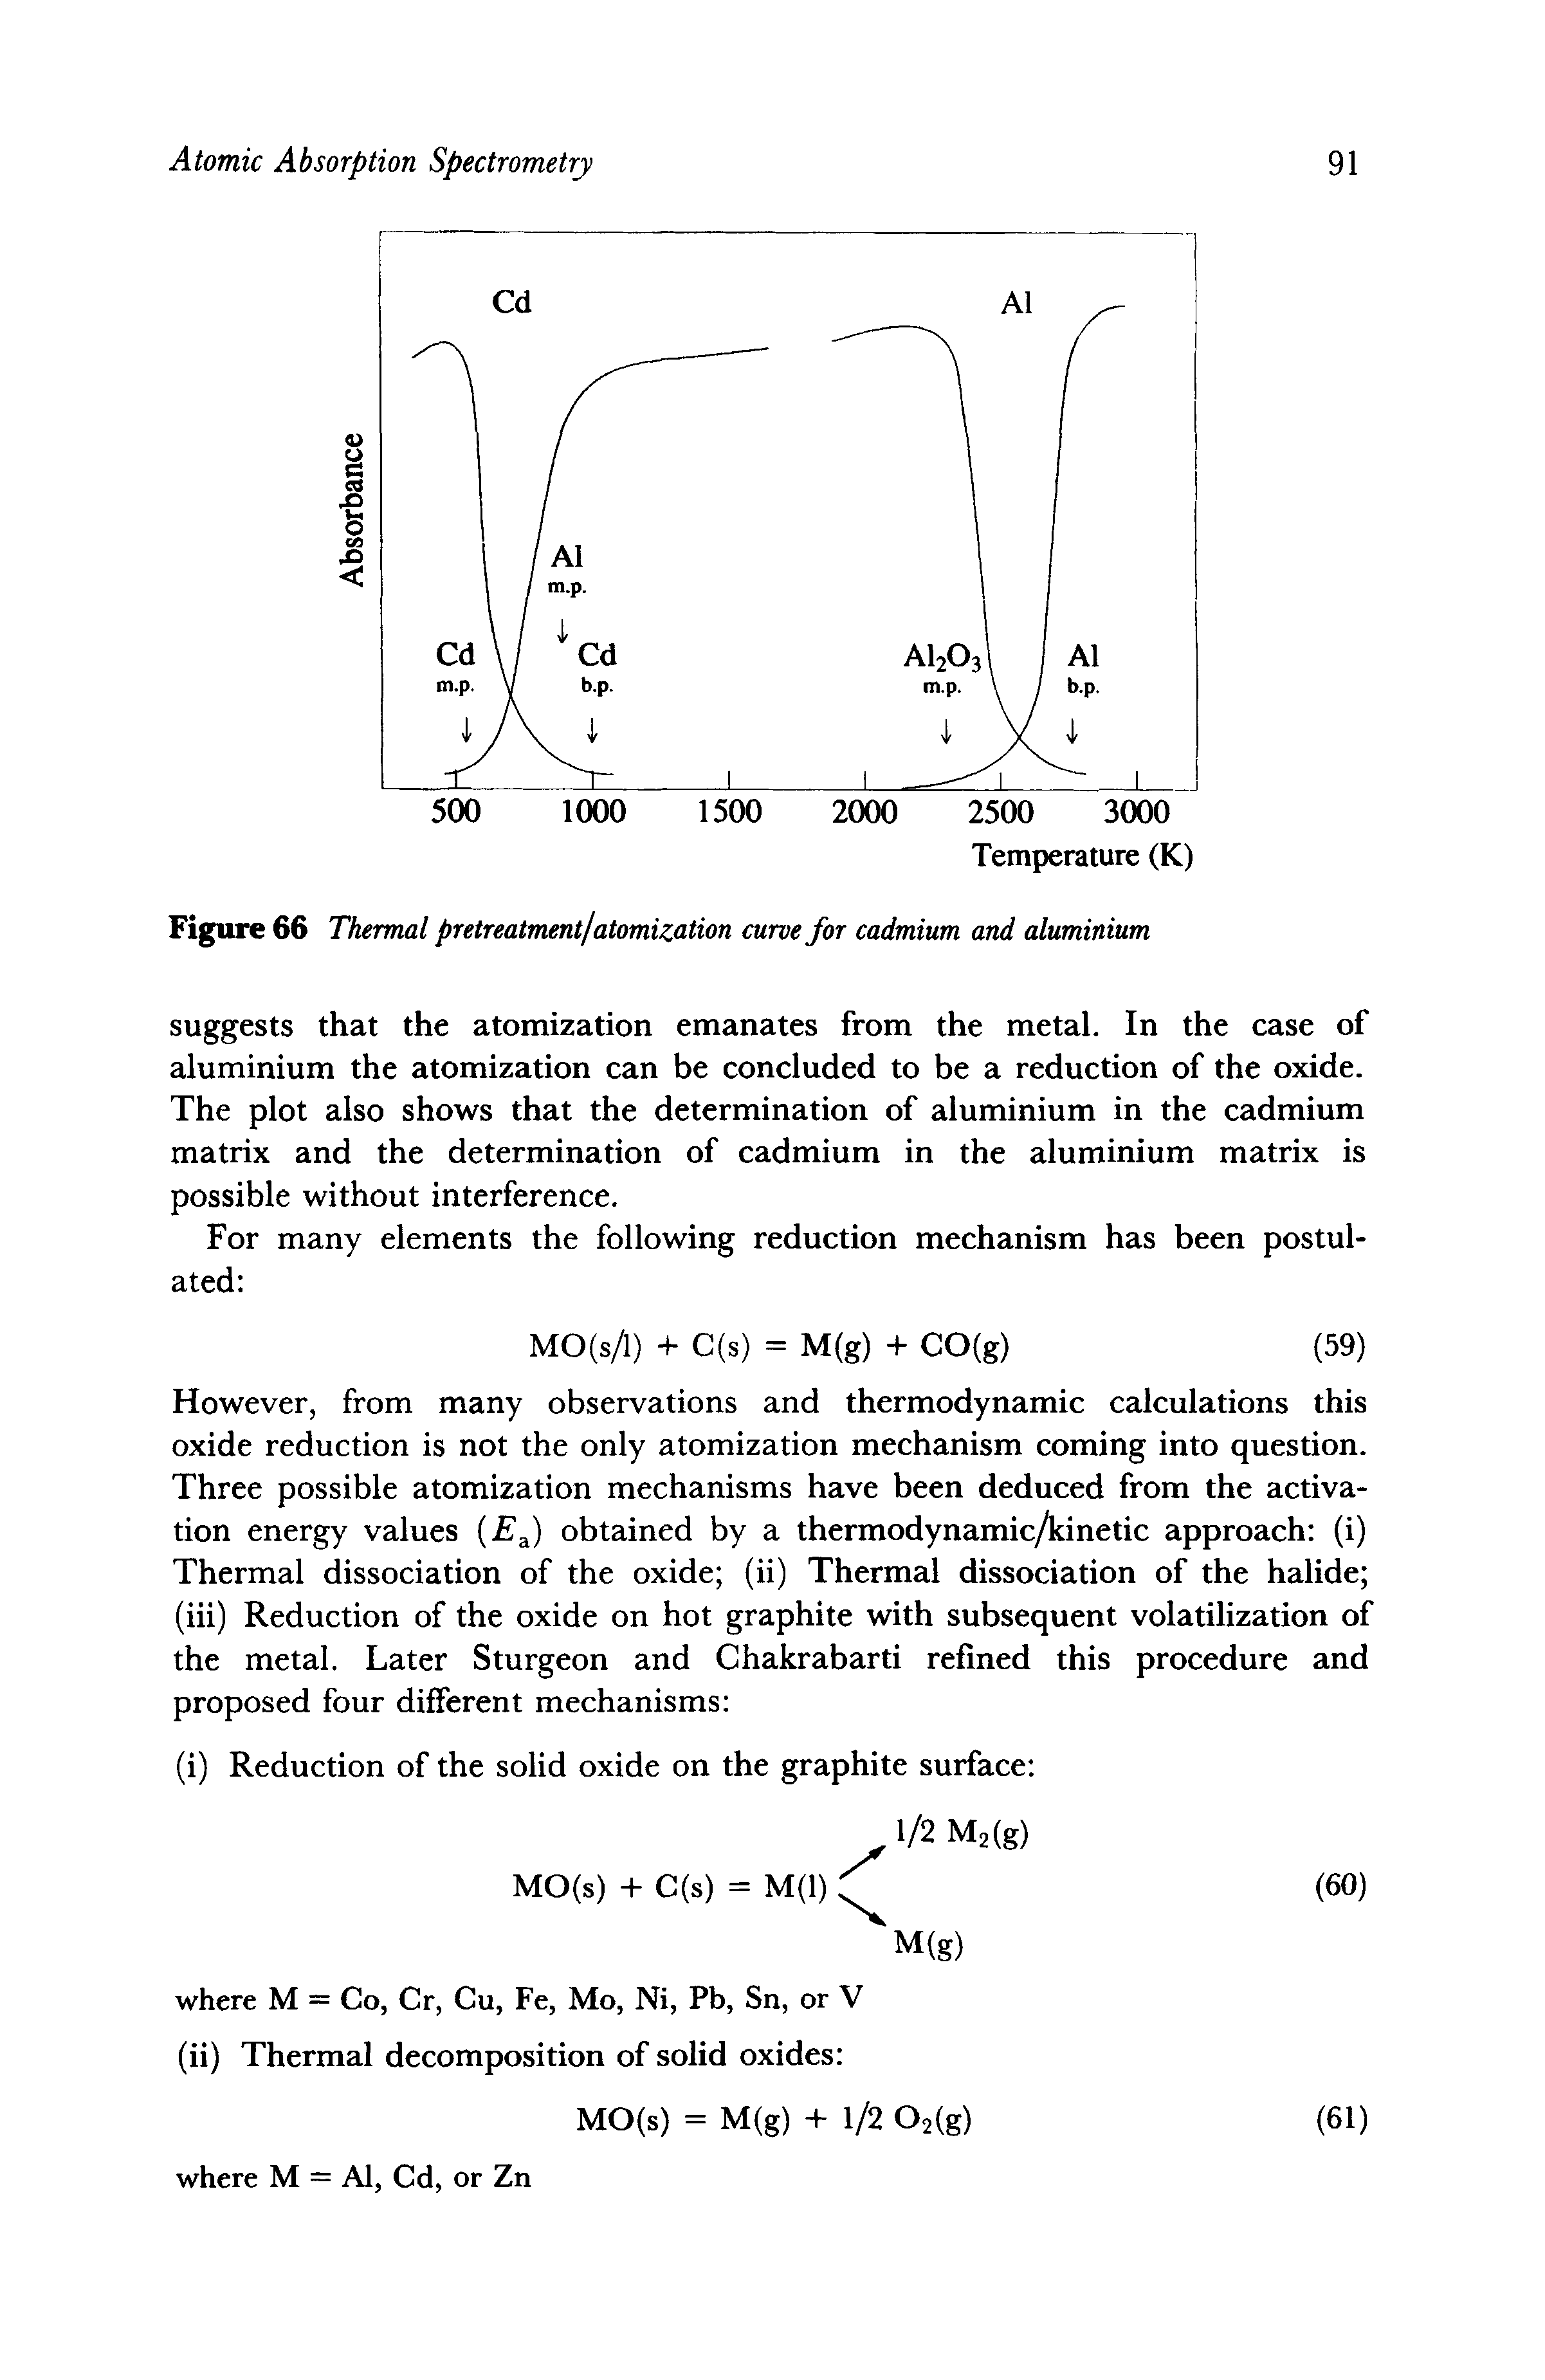 Figure 66 Thermal pretreatment/atomization curve for cadmium and aluminium...